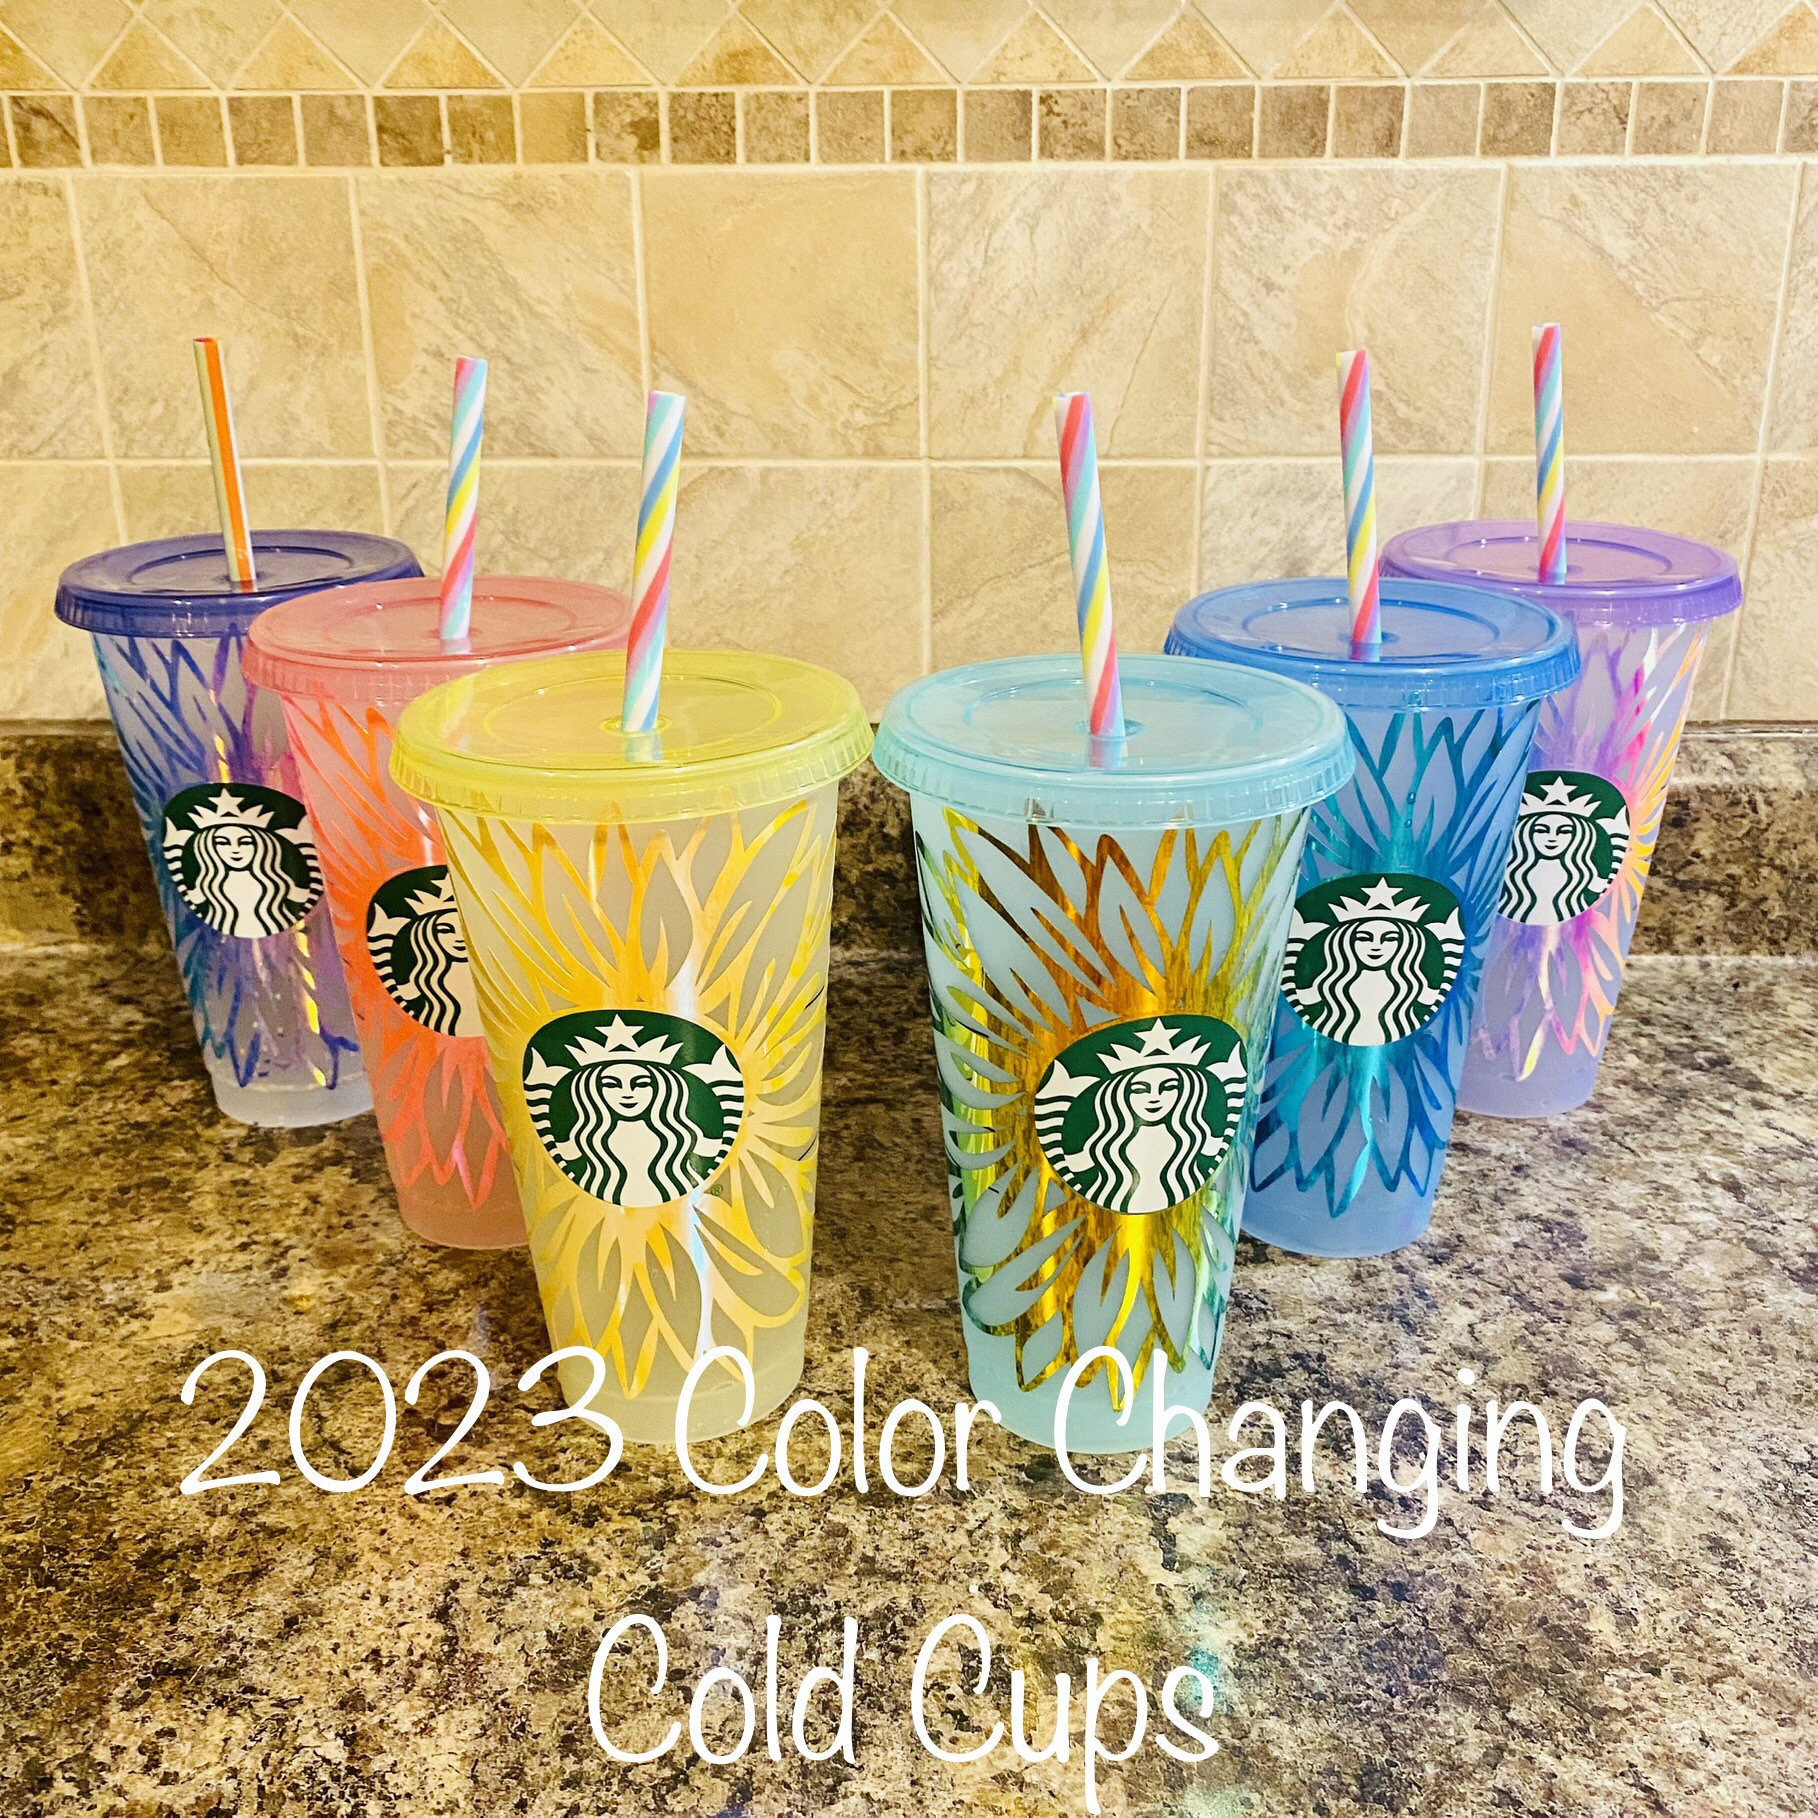 Starbucks Japan - Anniversary 2023 x Cold Cup Tumbler 710ml — USShoppingSOS